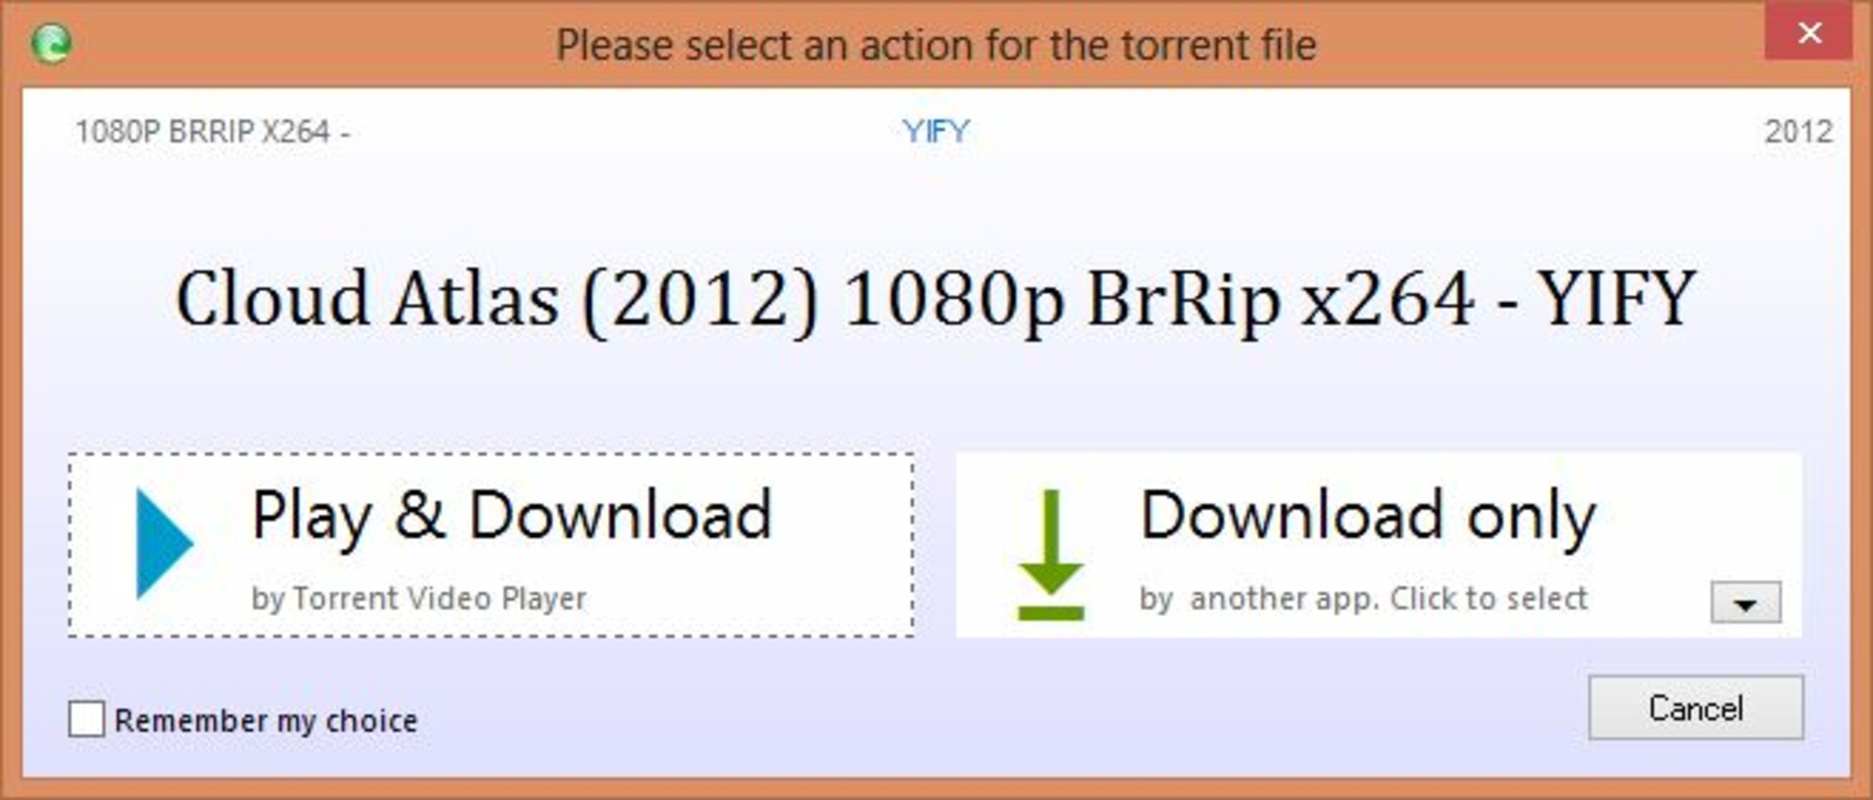 Torrent Video Player 1.0.1 Beta for Windows Screenshot 4